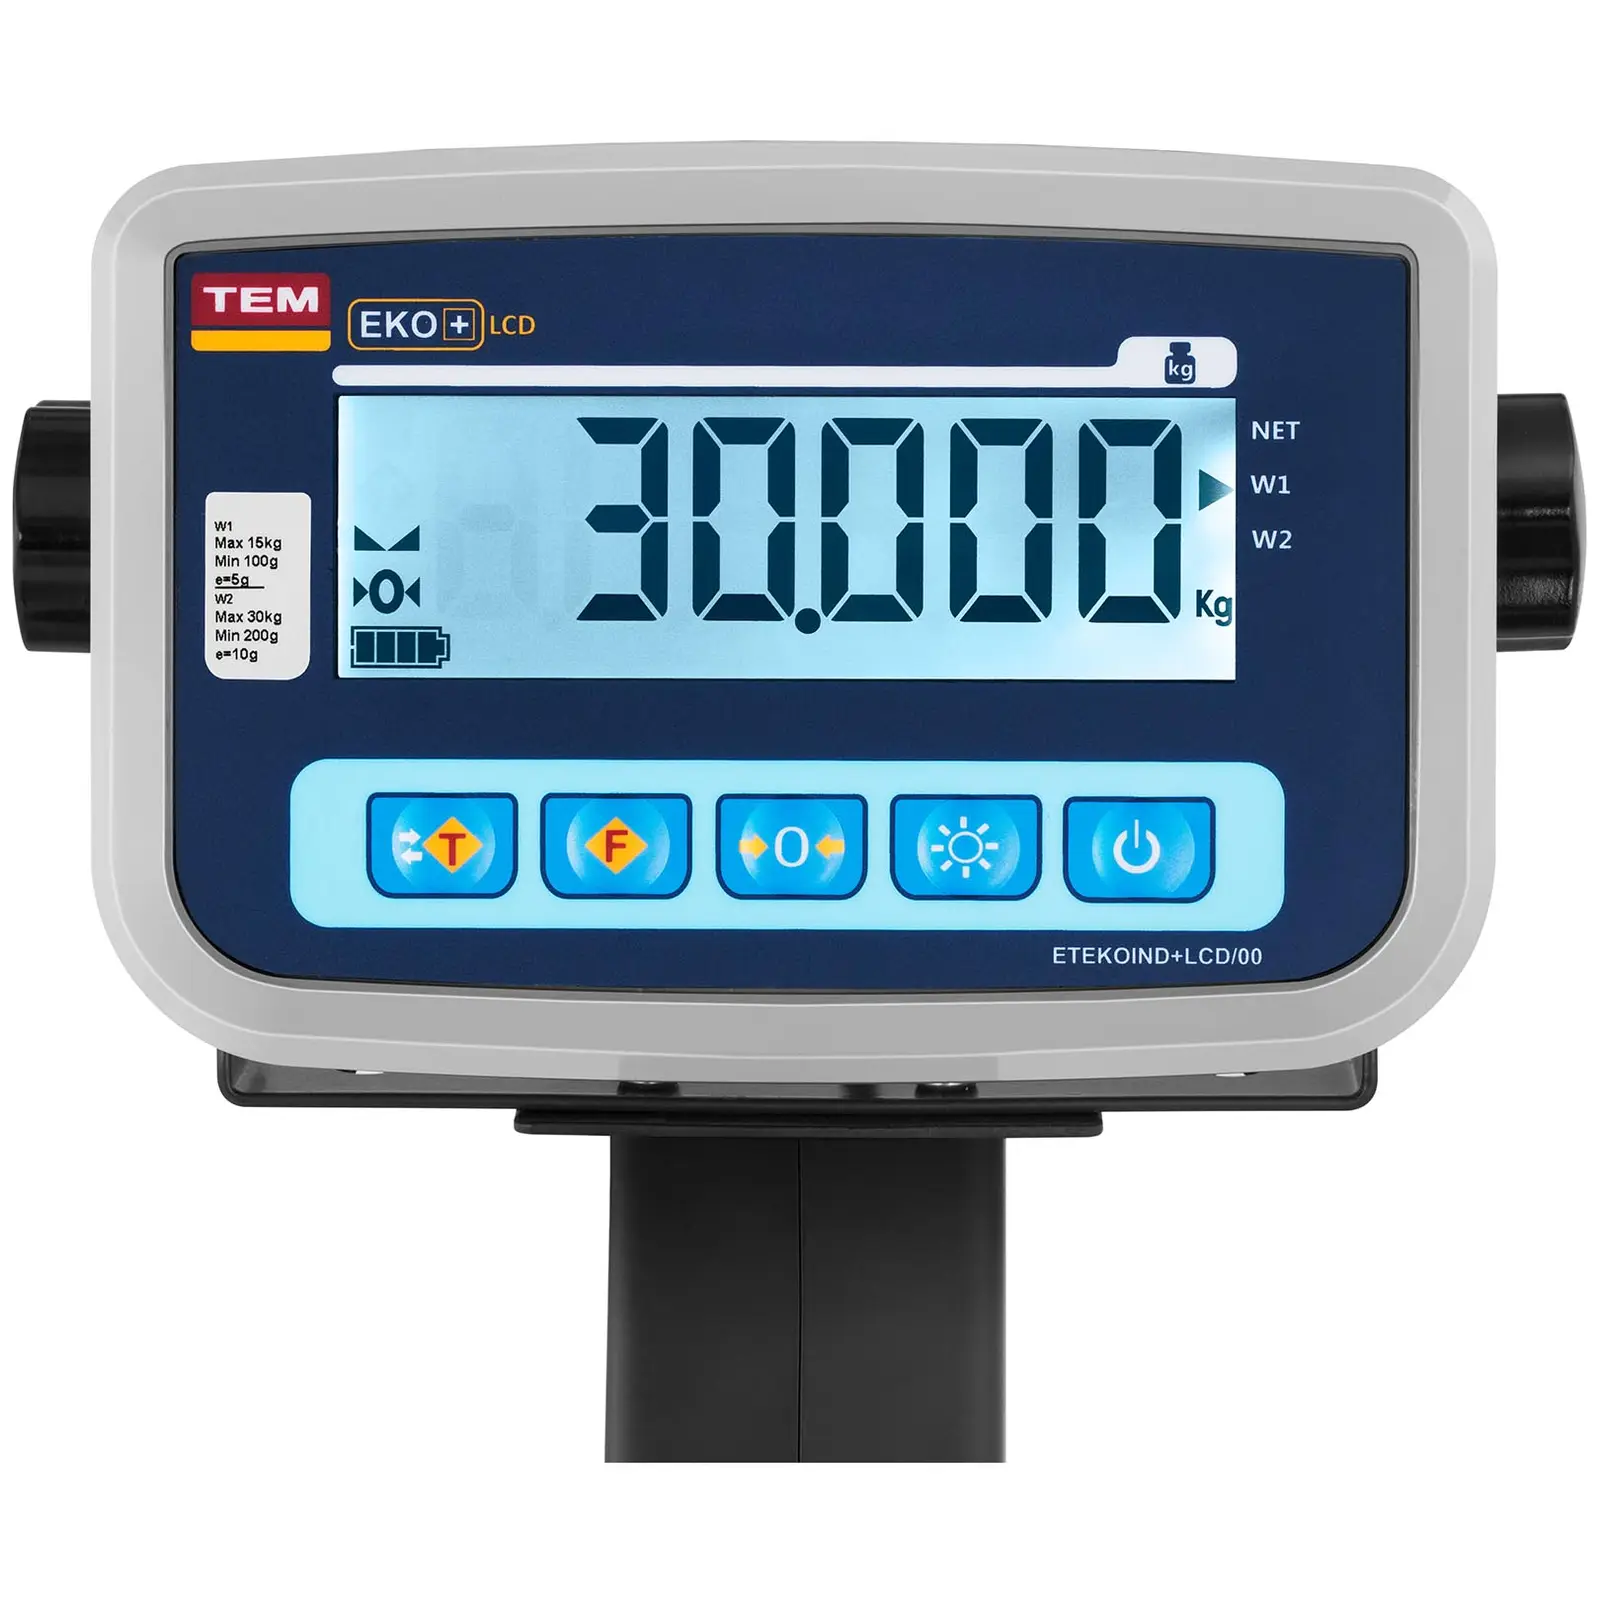 Platform Scale - calibrated - 30 kg / 10 g